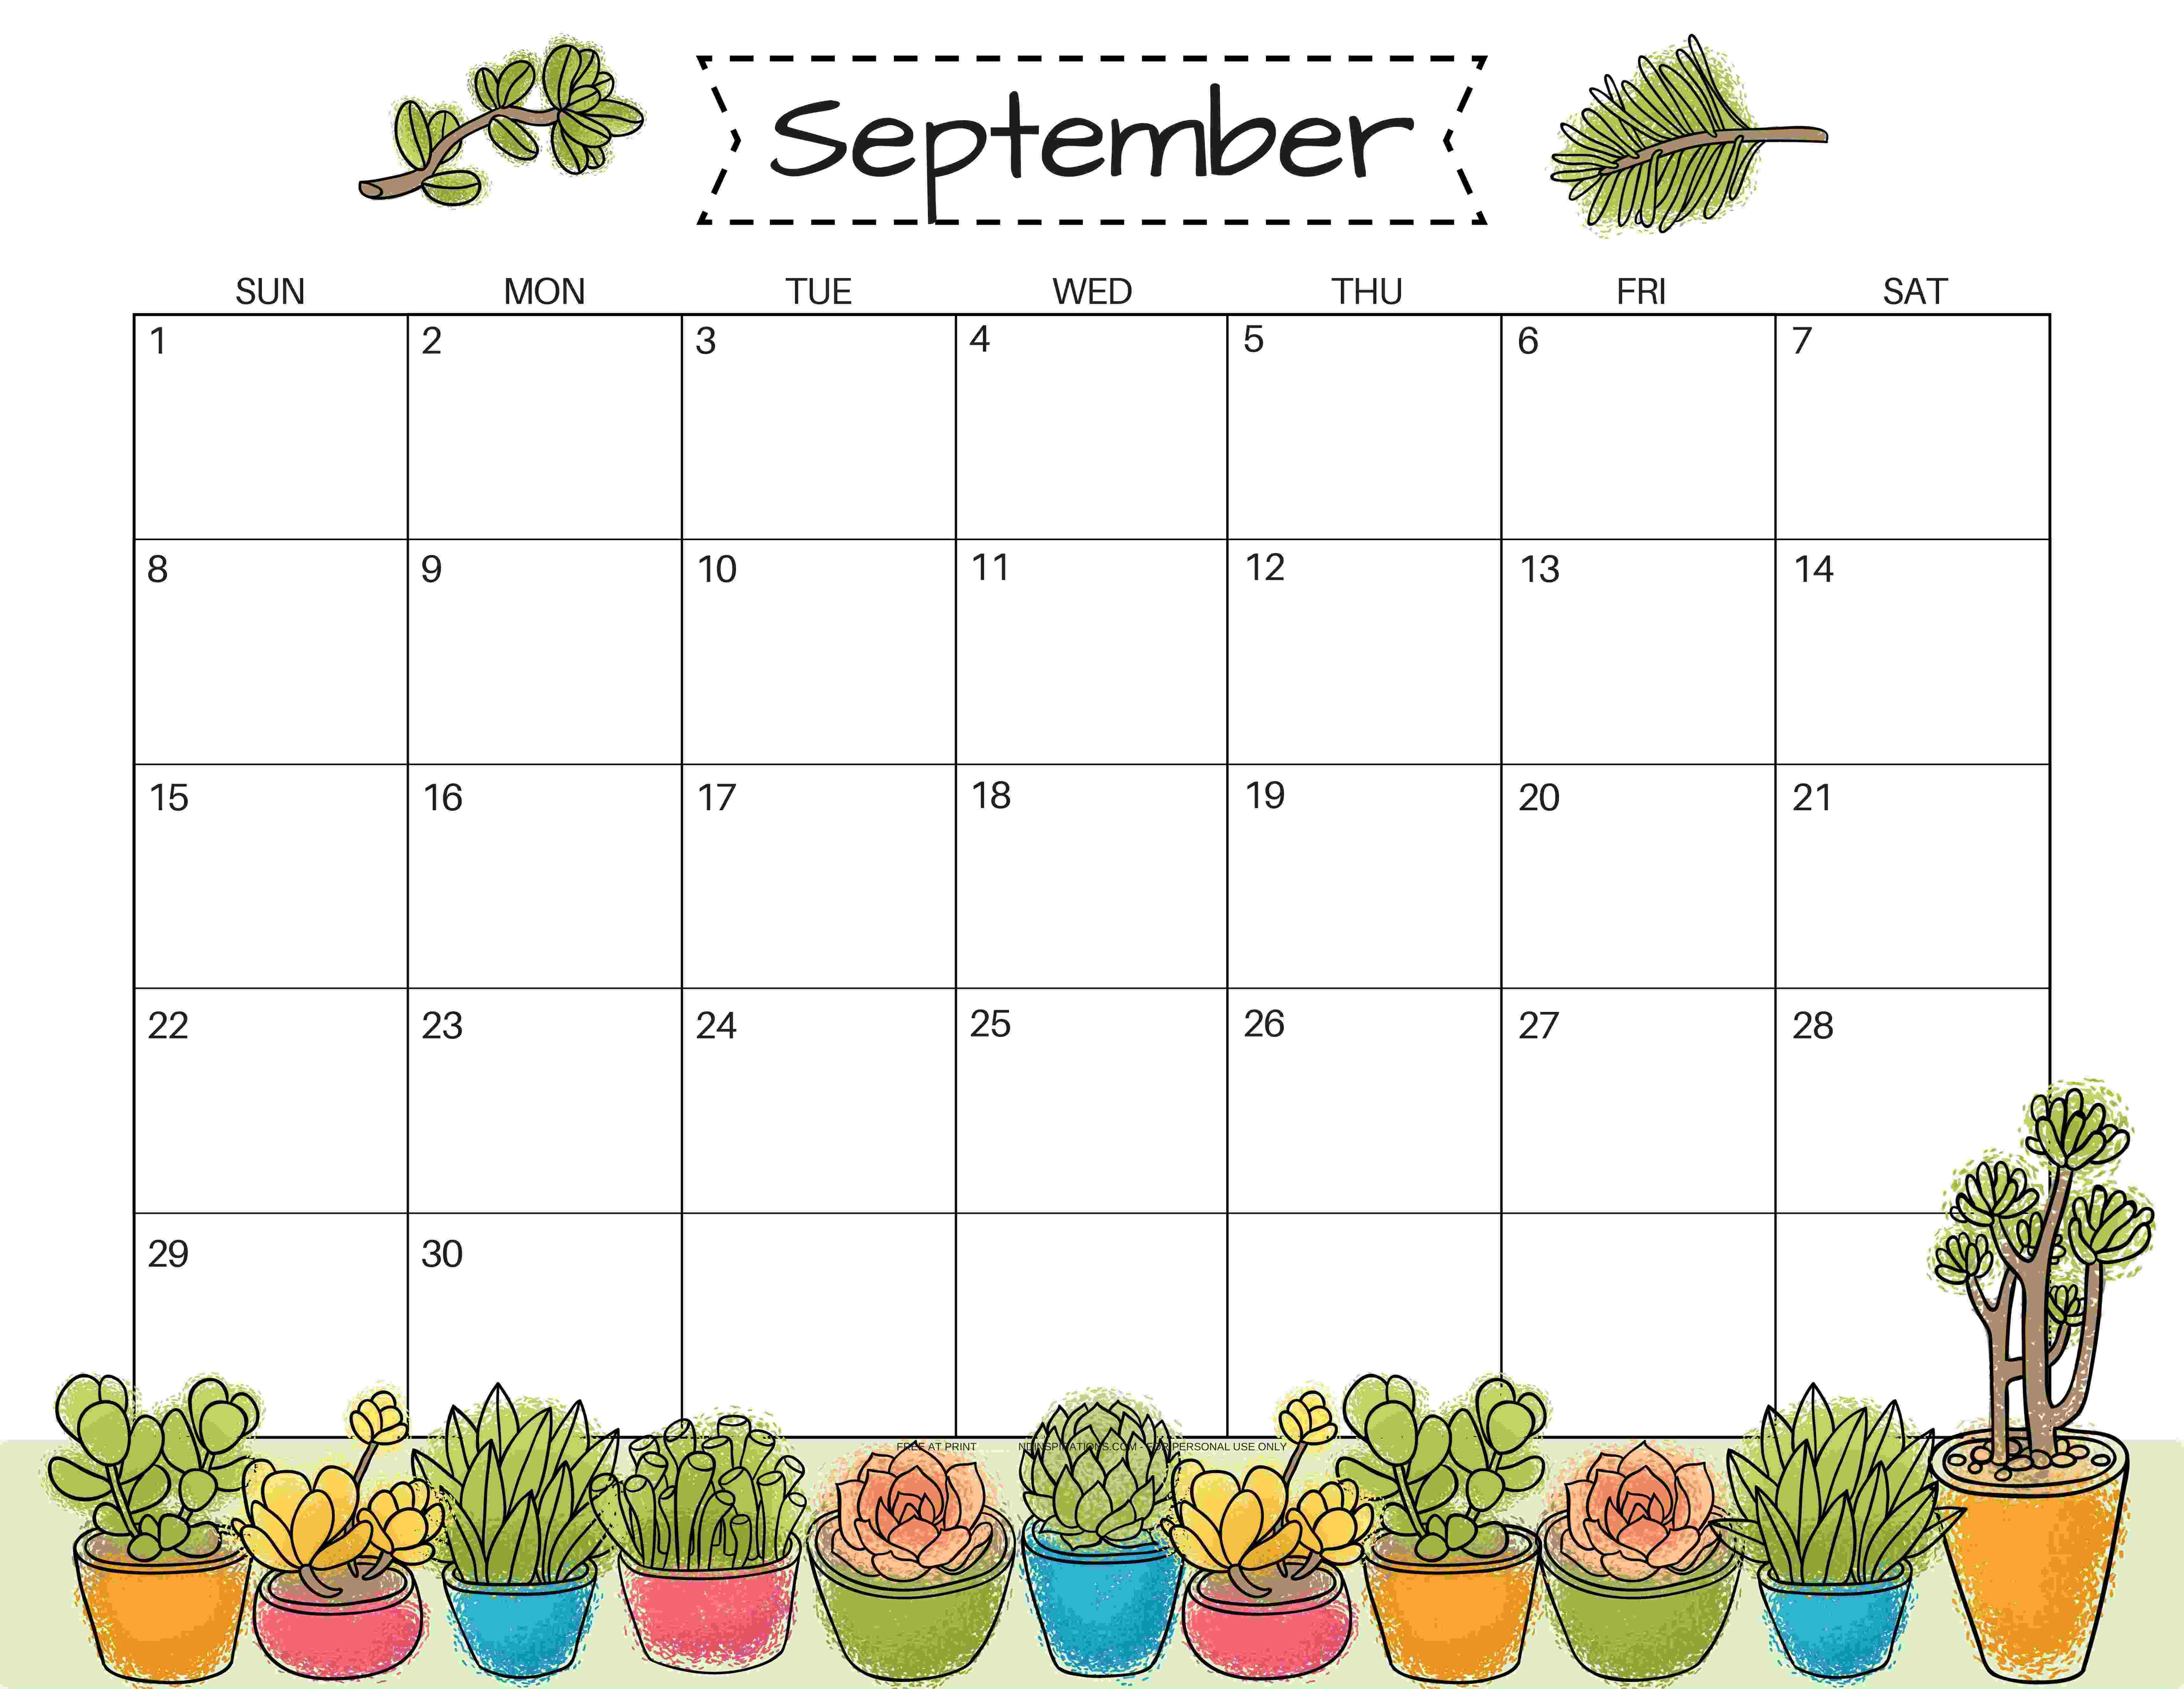 Cute September 2019 Calendar Wallpapers Image